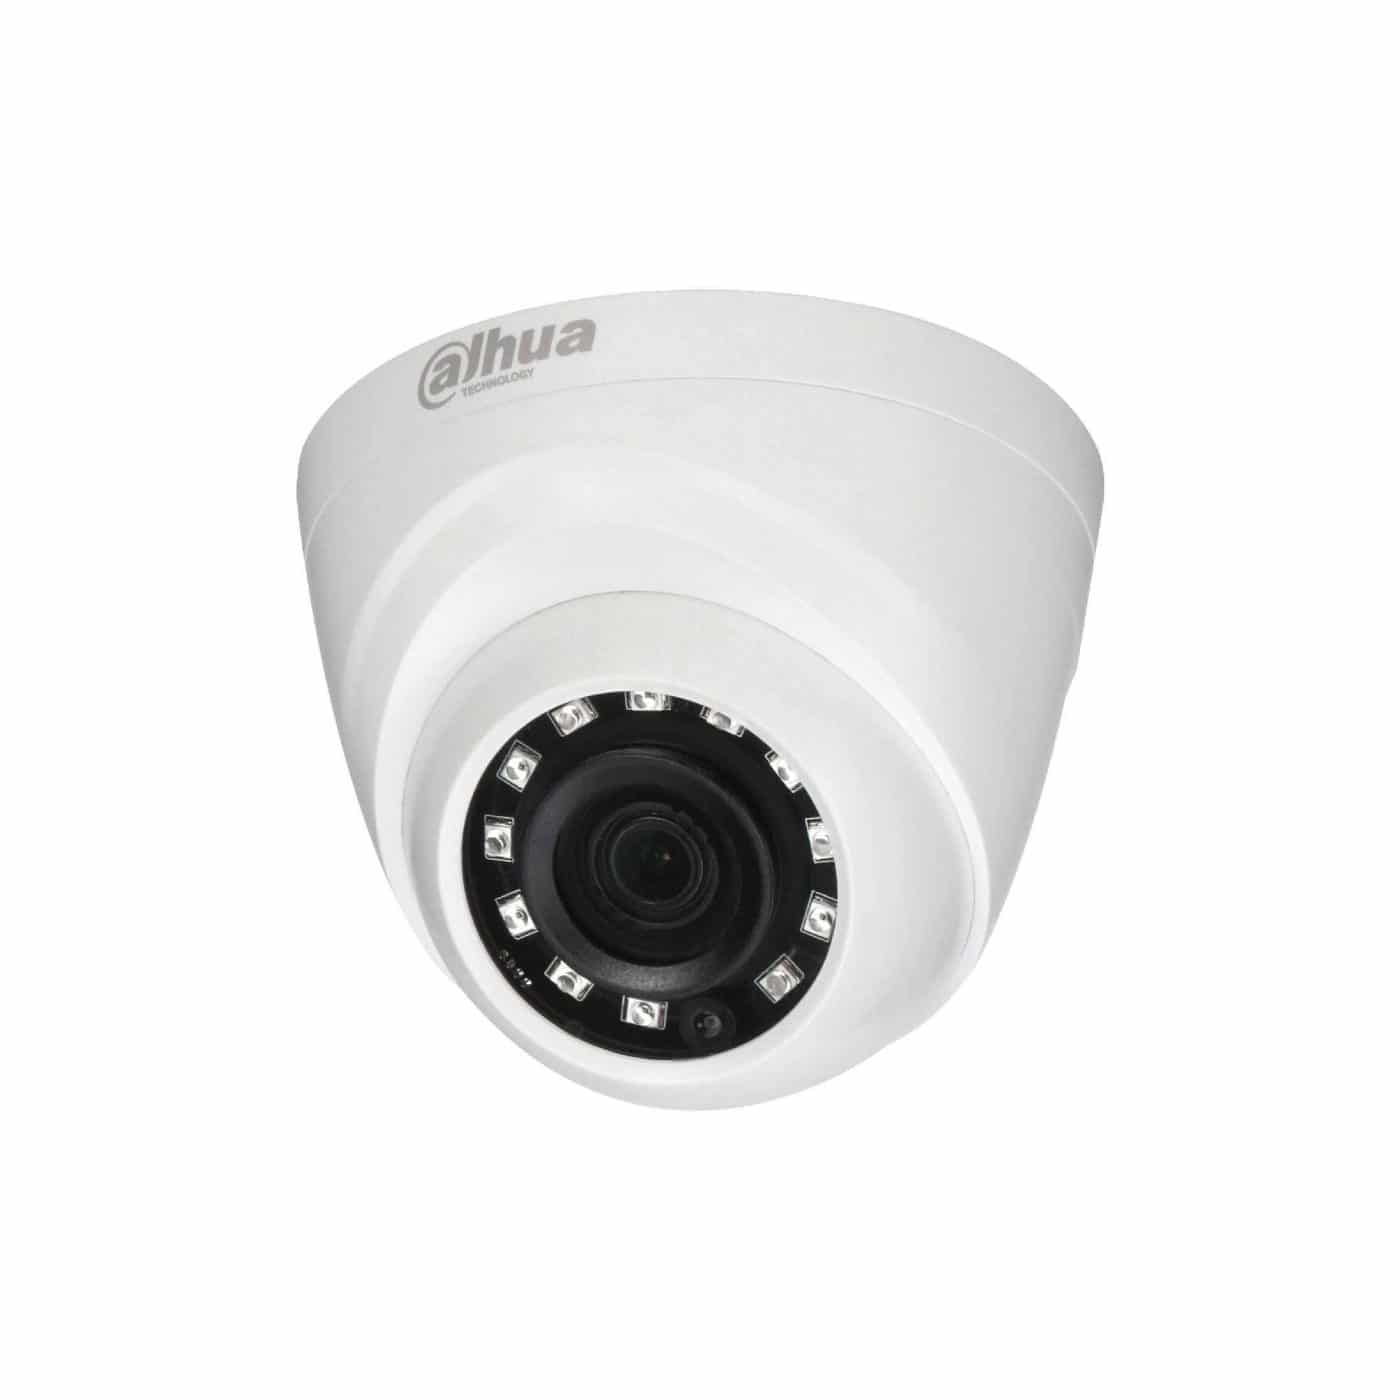 BANAAO Mini cámara de seguridad inalámbrica WiFi HD 1080P – Visión